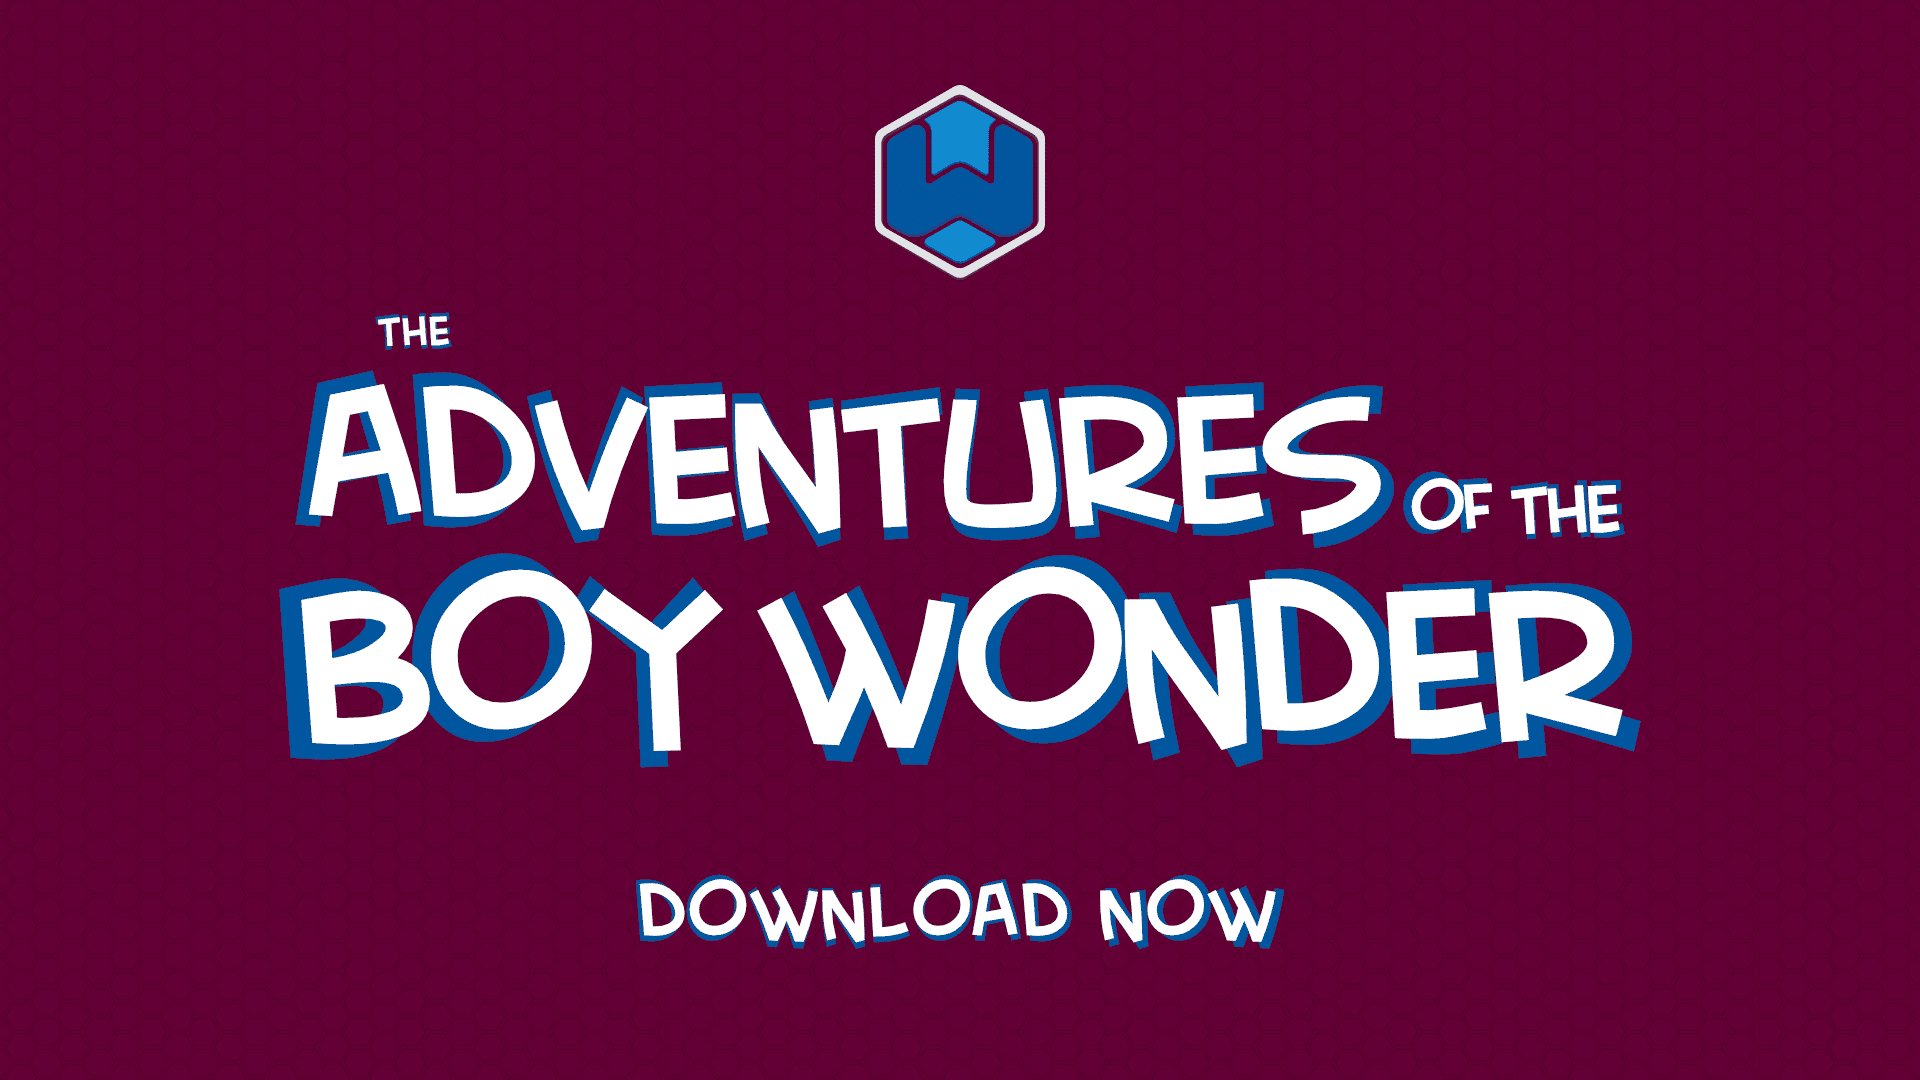 Download Adventures of the Boy Wonder now